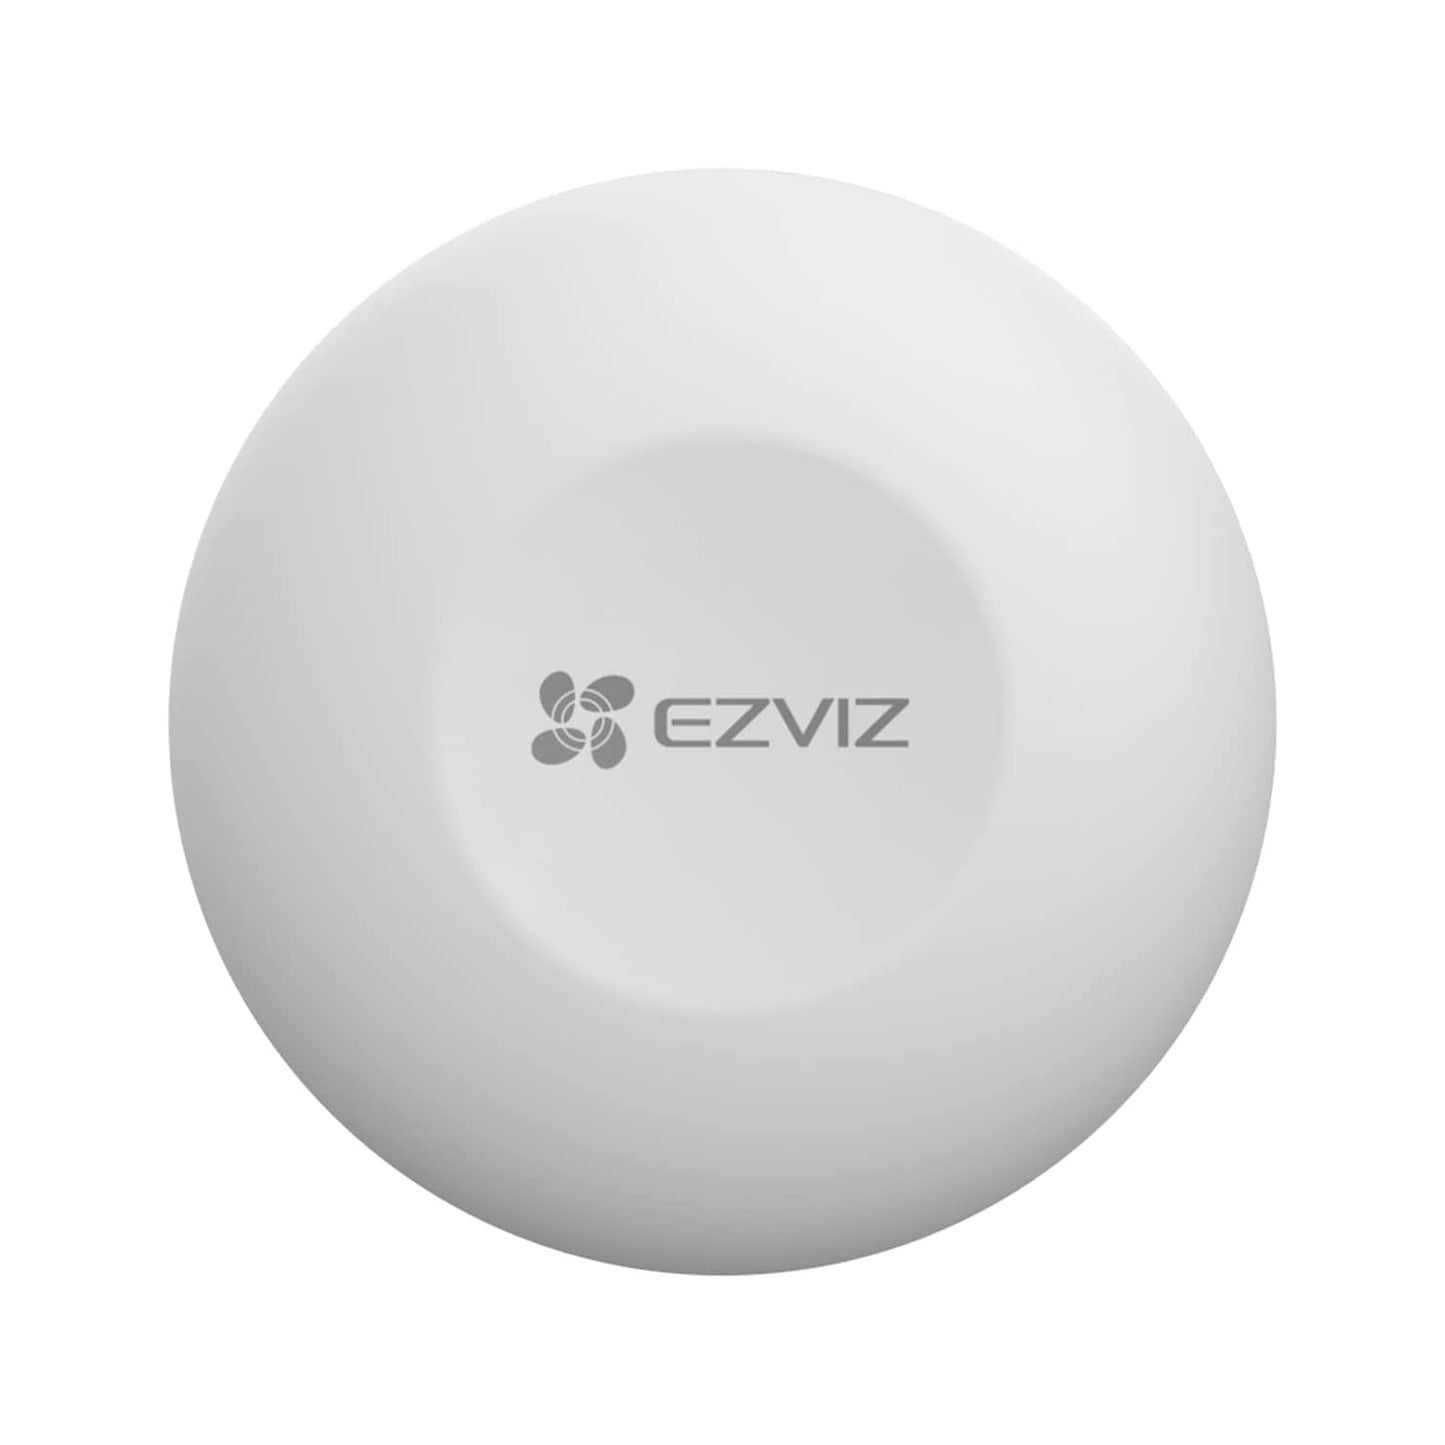 Ezviz CS-B1 Kit sensori smart home, gateway domestico, sensore PIR, Sensore di apertura e chiusura, pulsante smart SOS, allarme istantaneo su smartphone